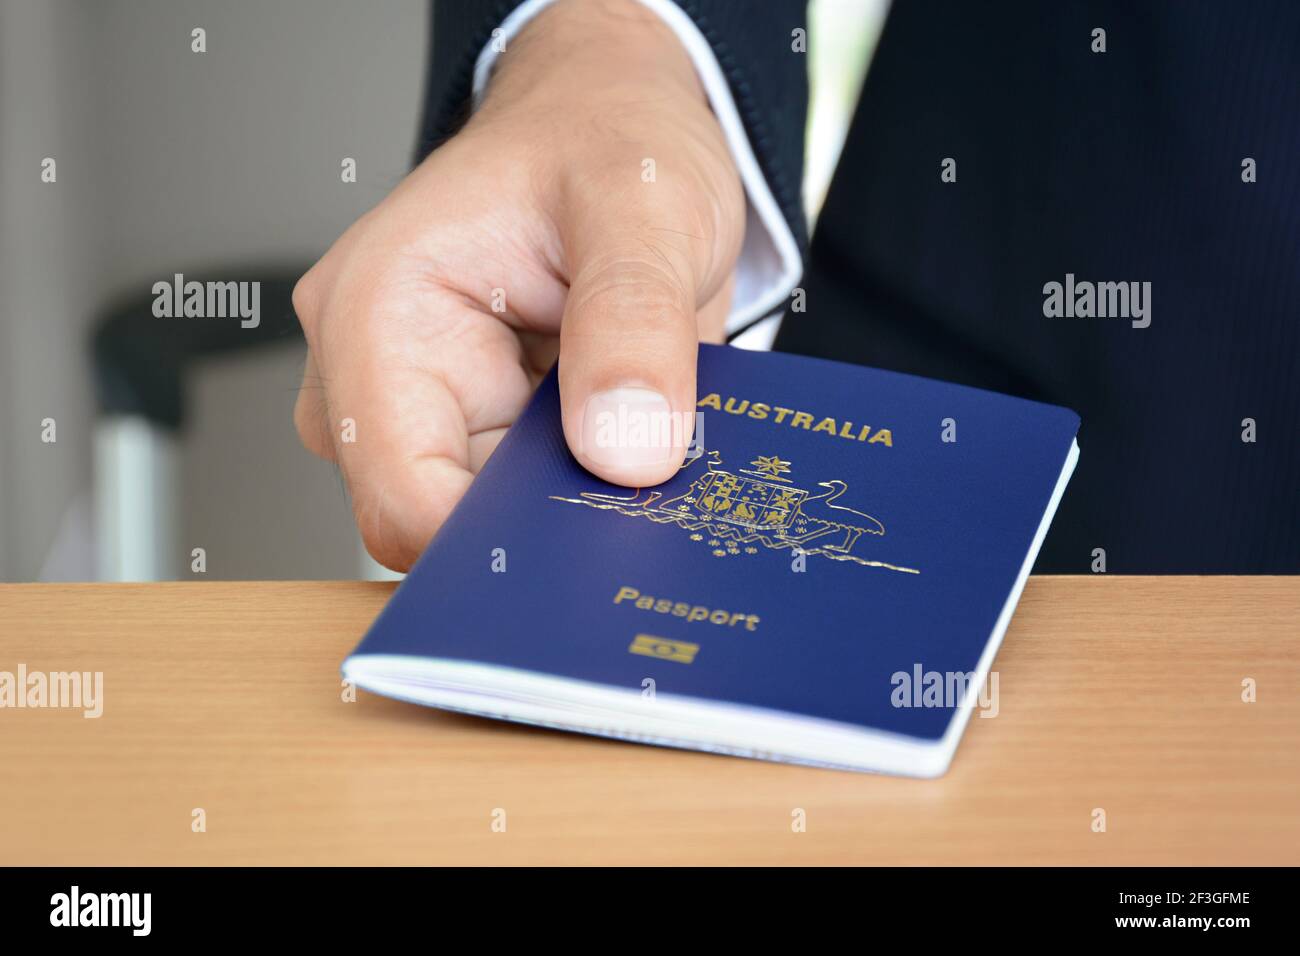 Hands giving passport (of Australia) Stock Photo